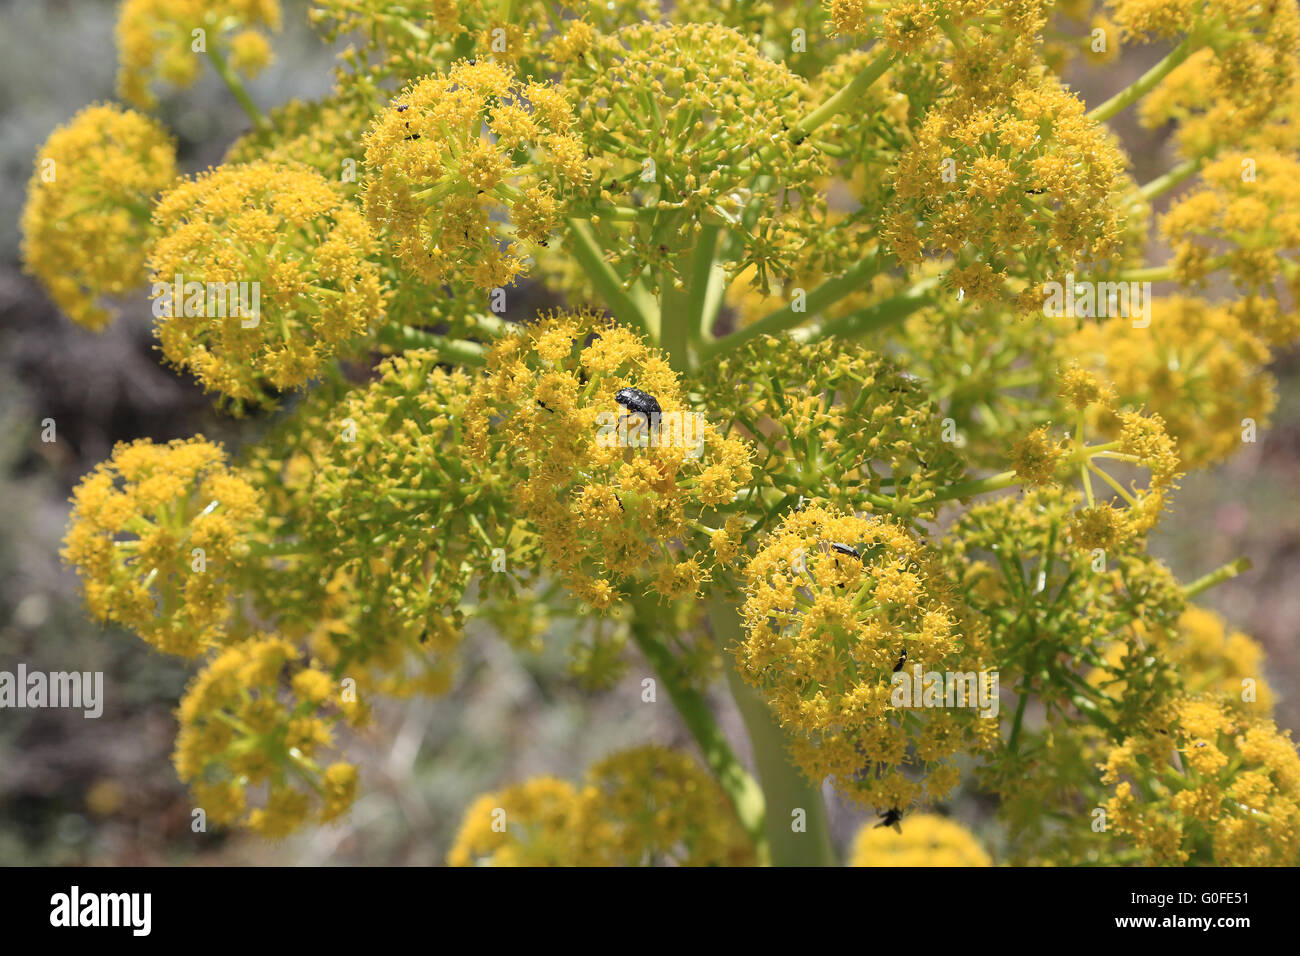 Flowering giant fennel at Capo Testa in Sicily is typical Mediterranean coastal vegetation Stock Photo